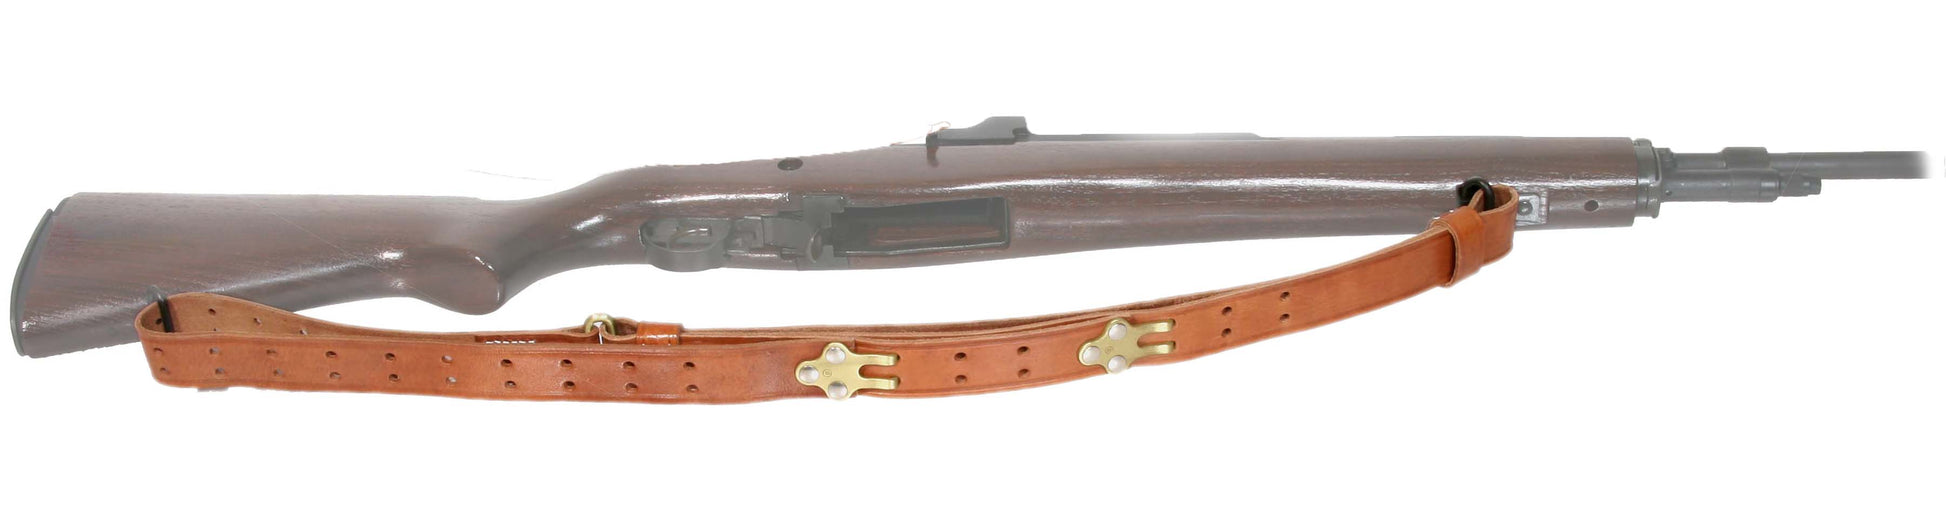 Original Boyt M1 Garand Sling